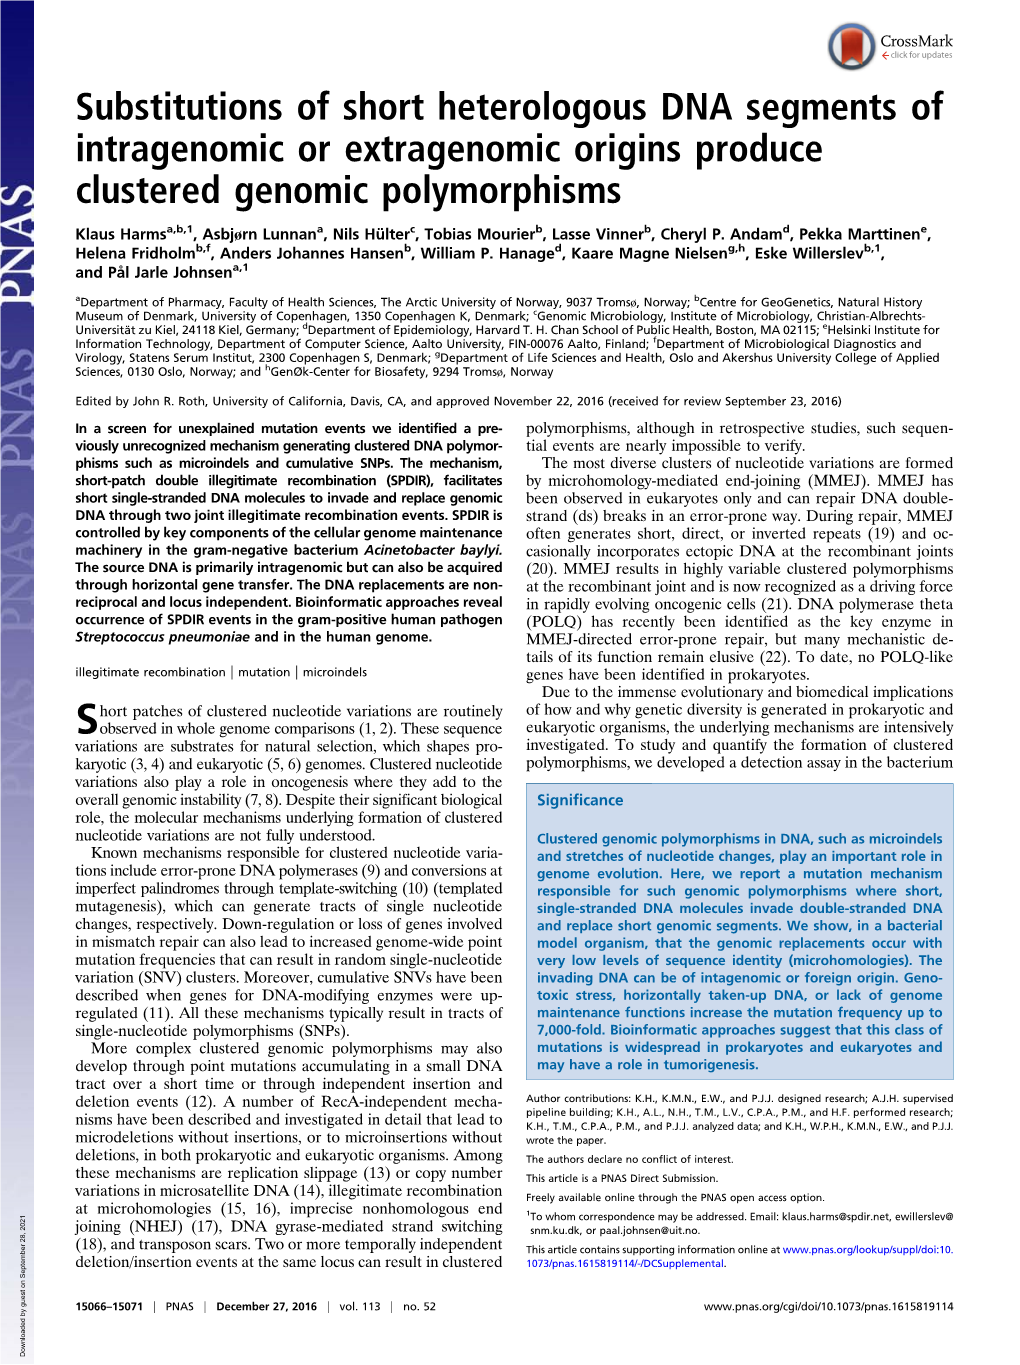 Substitutions of Short Heterologous DNA Segments of Intragenomic Or Extragenomic Origins Produce Clustered Genomic Polymorphisms